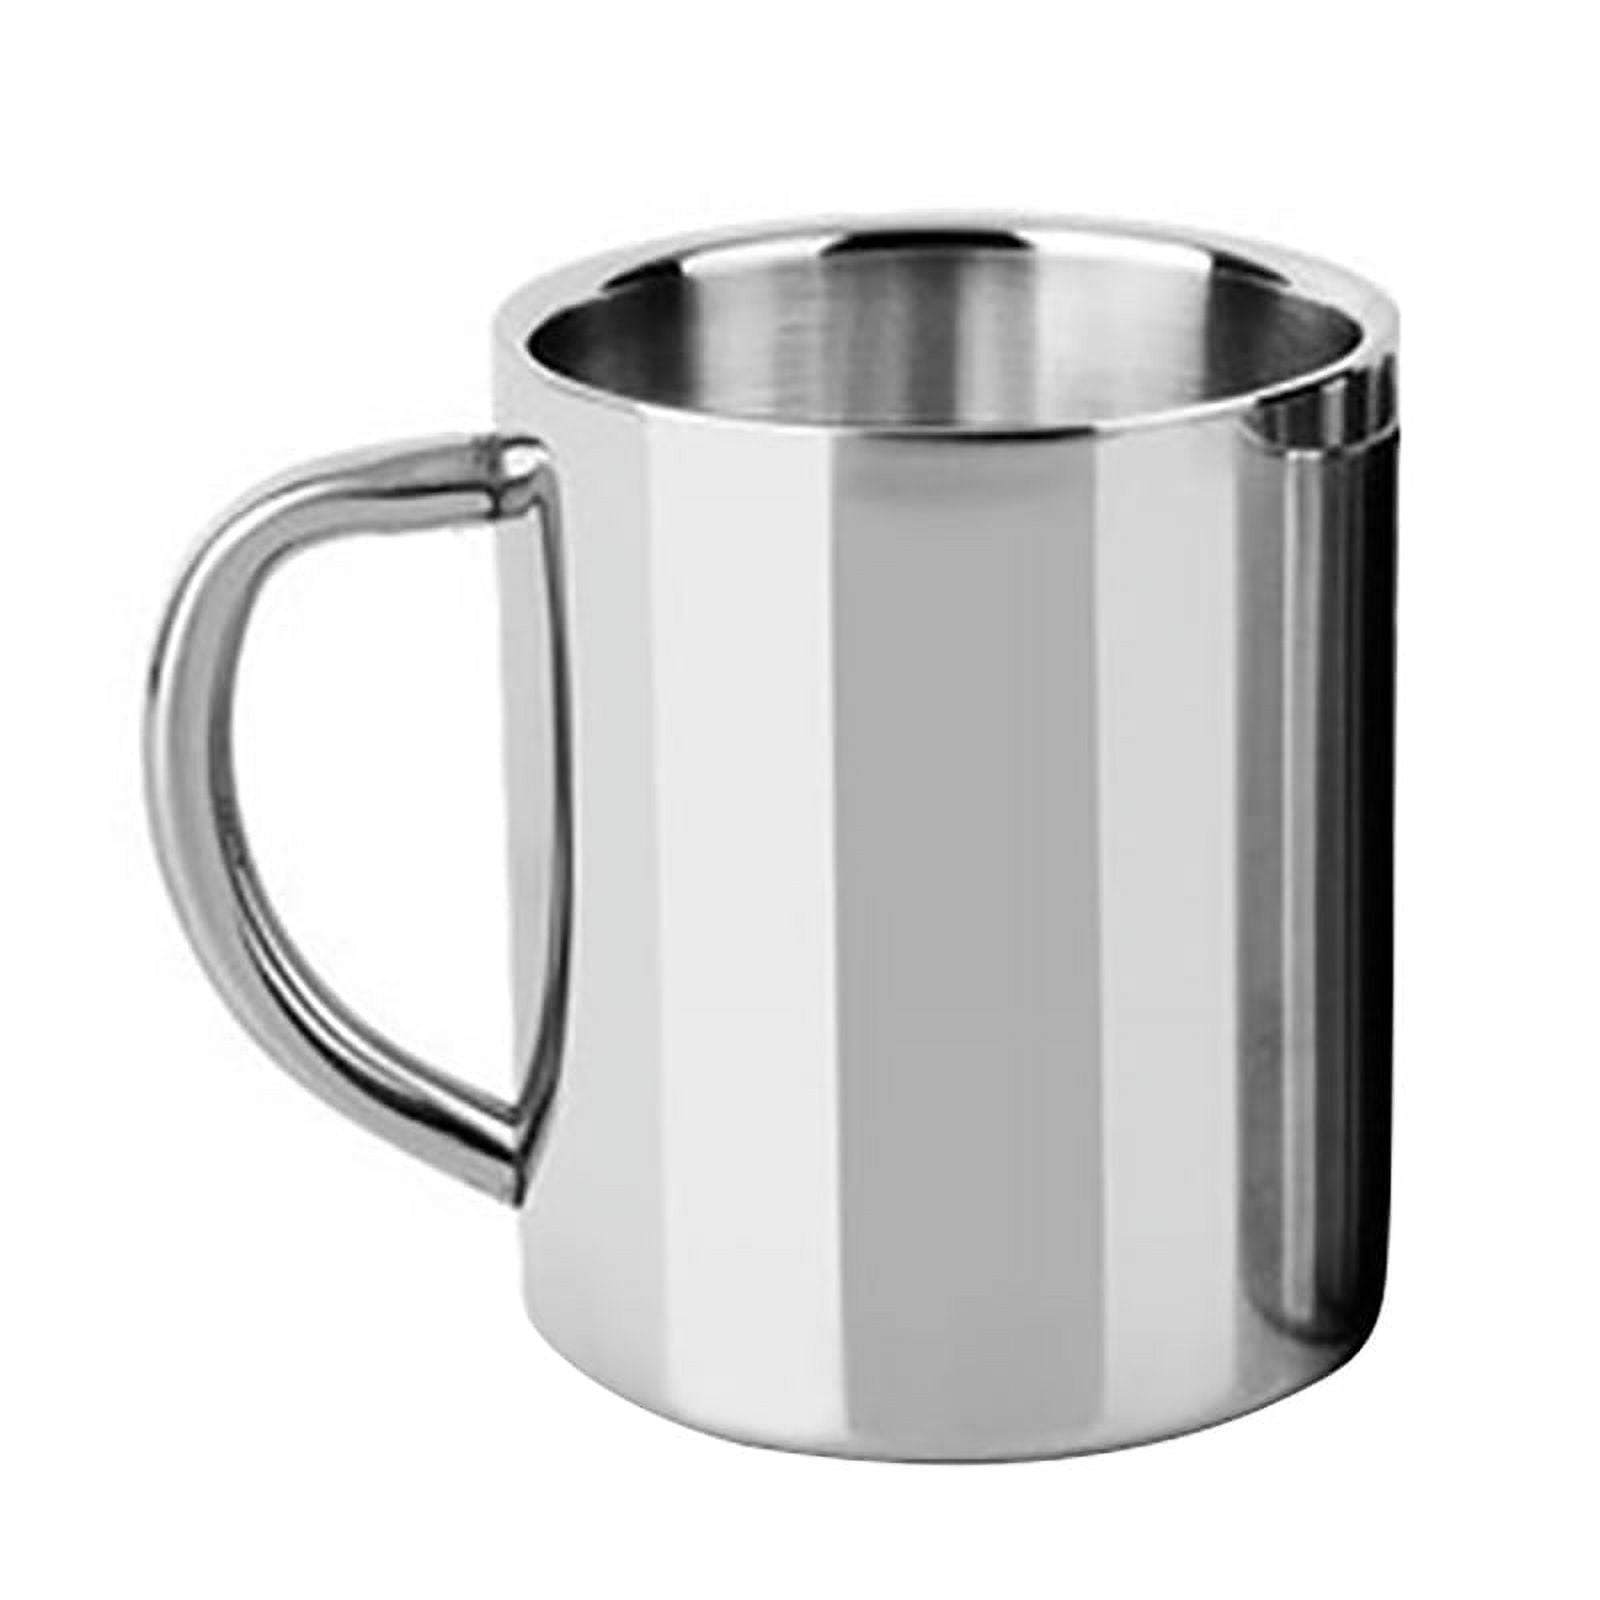 Picnic Tumblers Thermal Mug Beer Cups 300ml580ml Stainless Steel